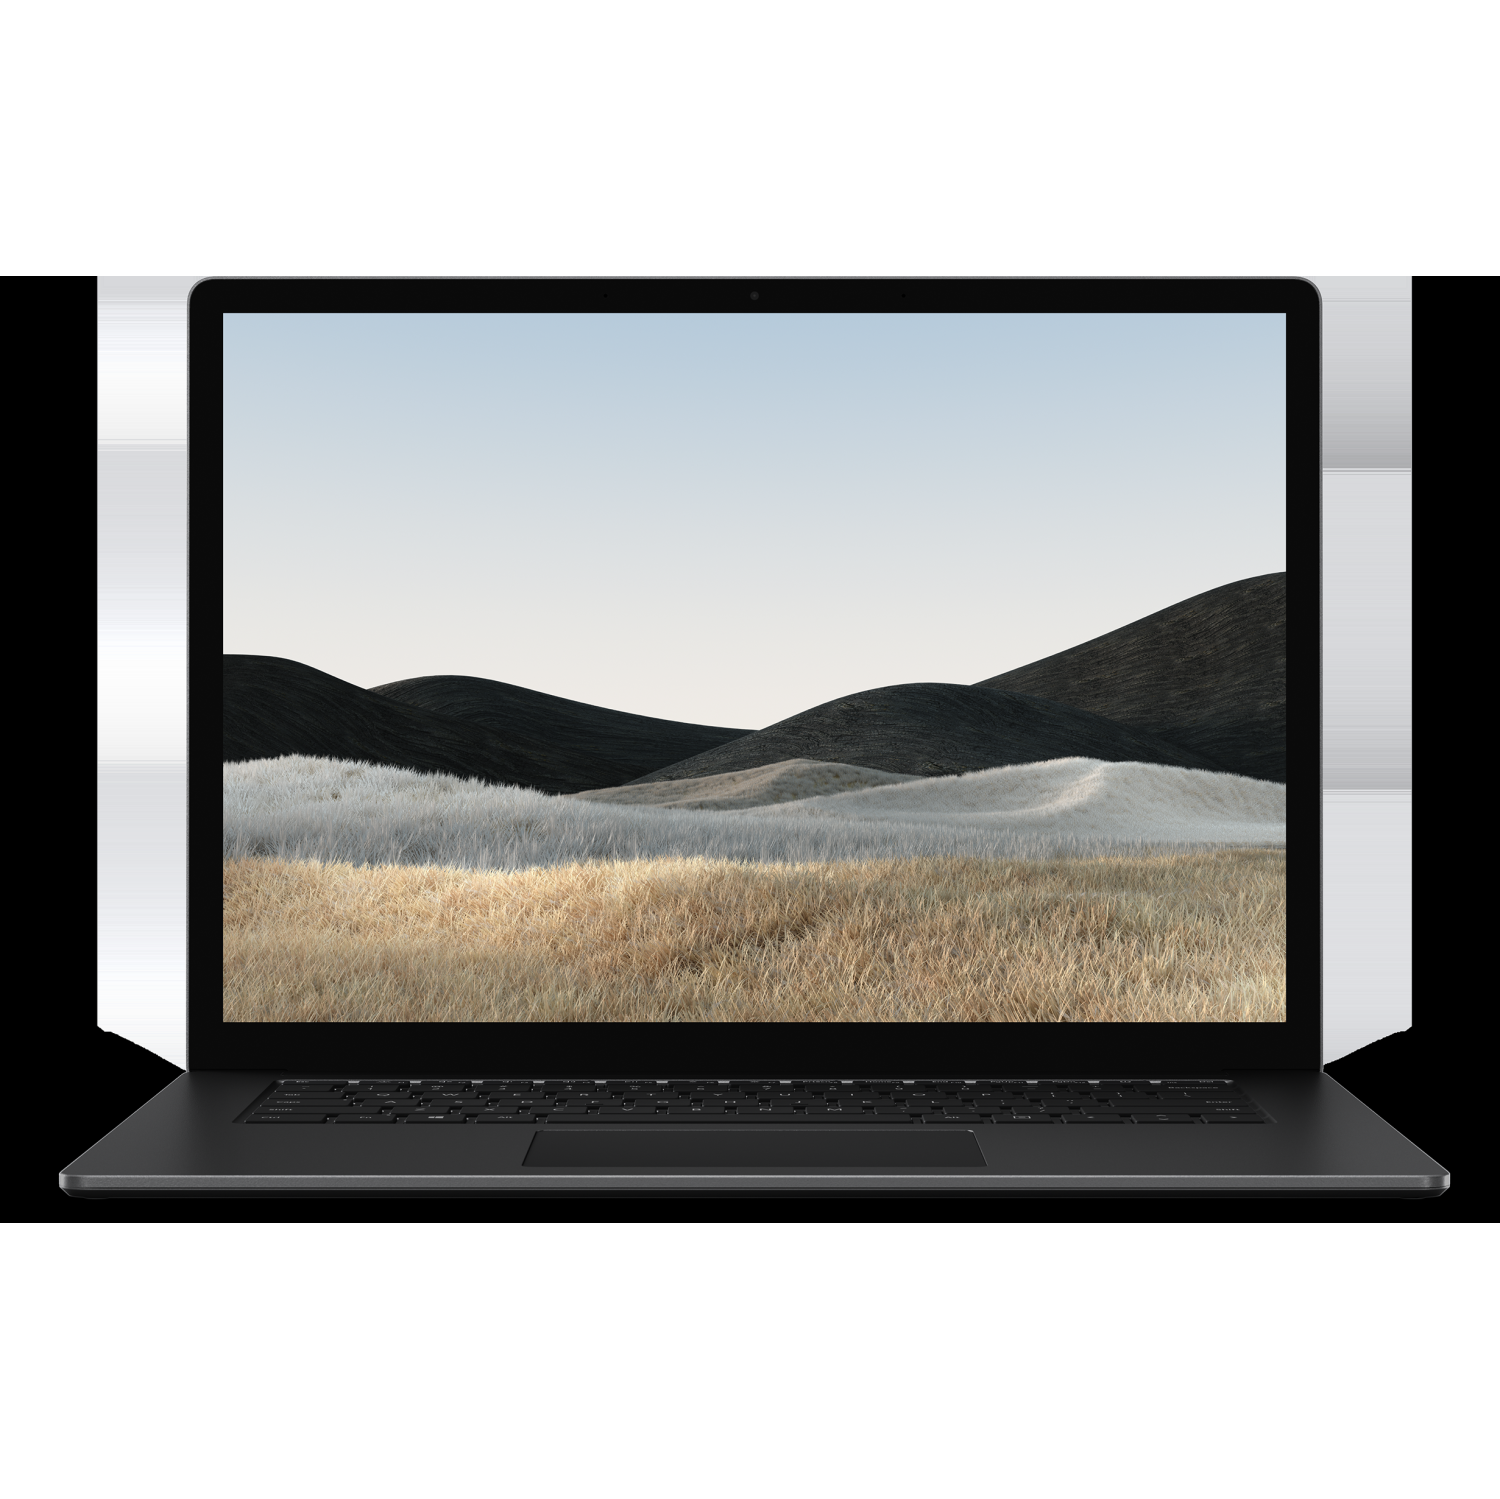 Refurbished (Good) - Microsoft Surface Laptop 4 13.5" - Matte Black (Intel Core i7-1185G7/256GB SSD/16GB RAM) - Touchscreen - Eng